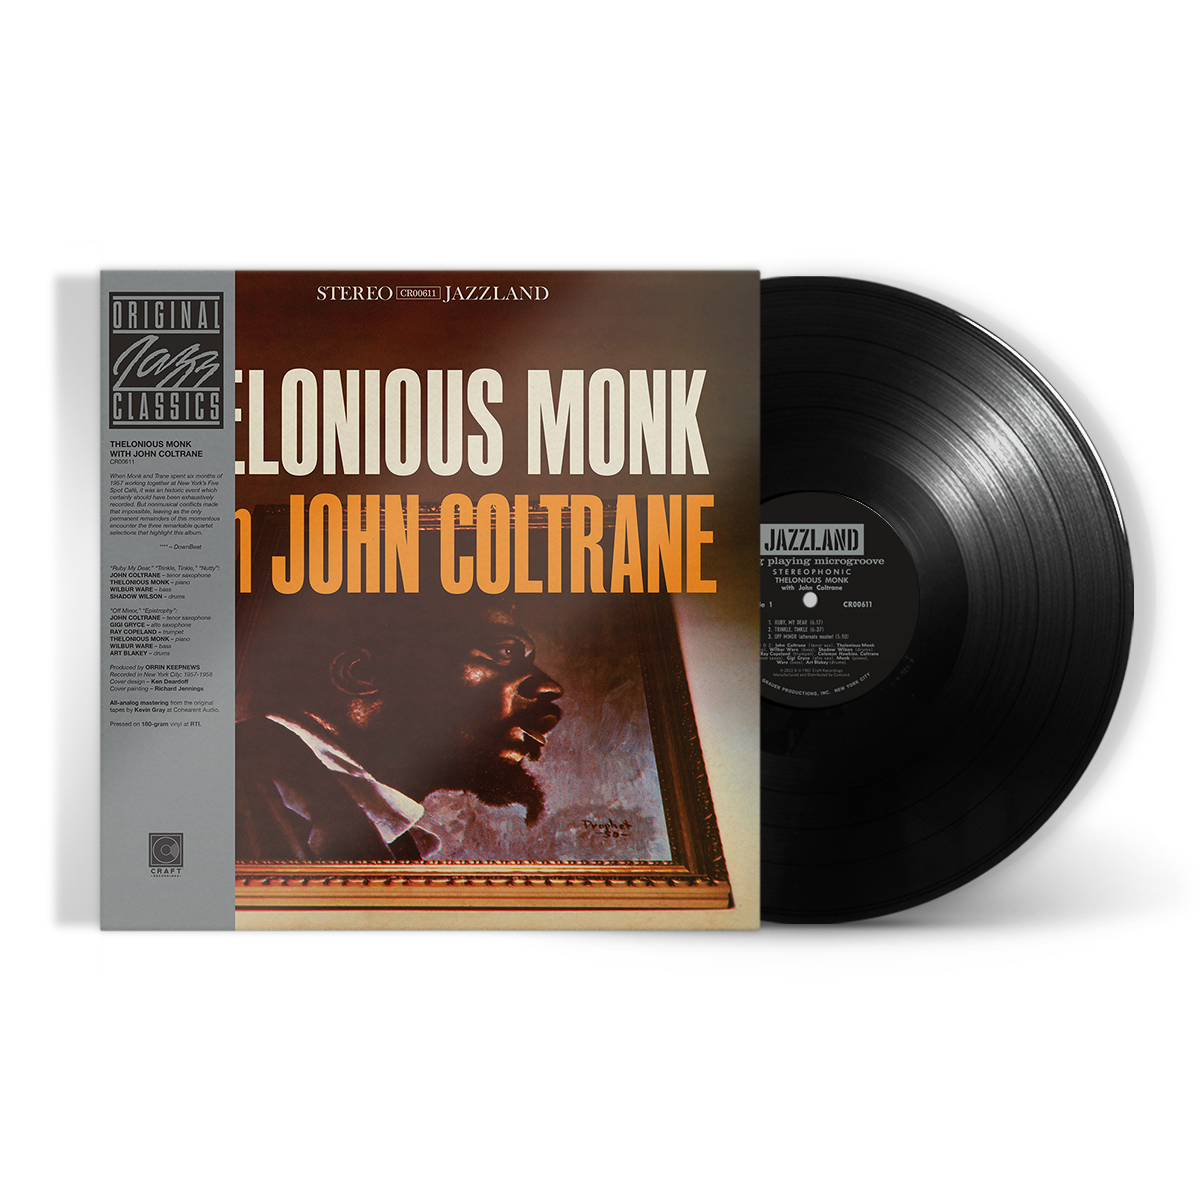 Thelonious Monk With John Coltrane (Original Jazz Classics Series) (180g LP)